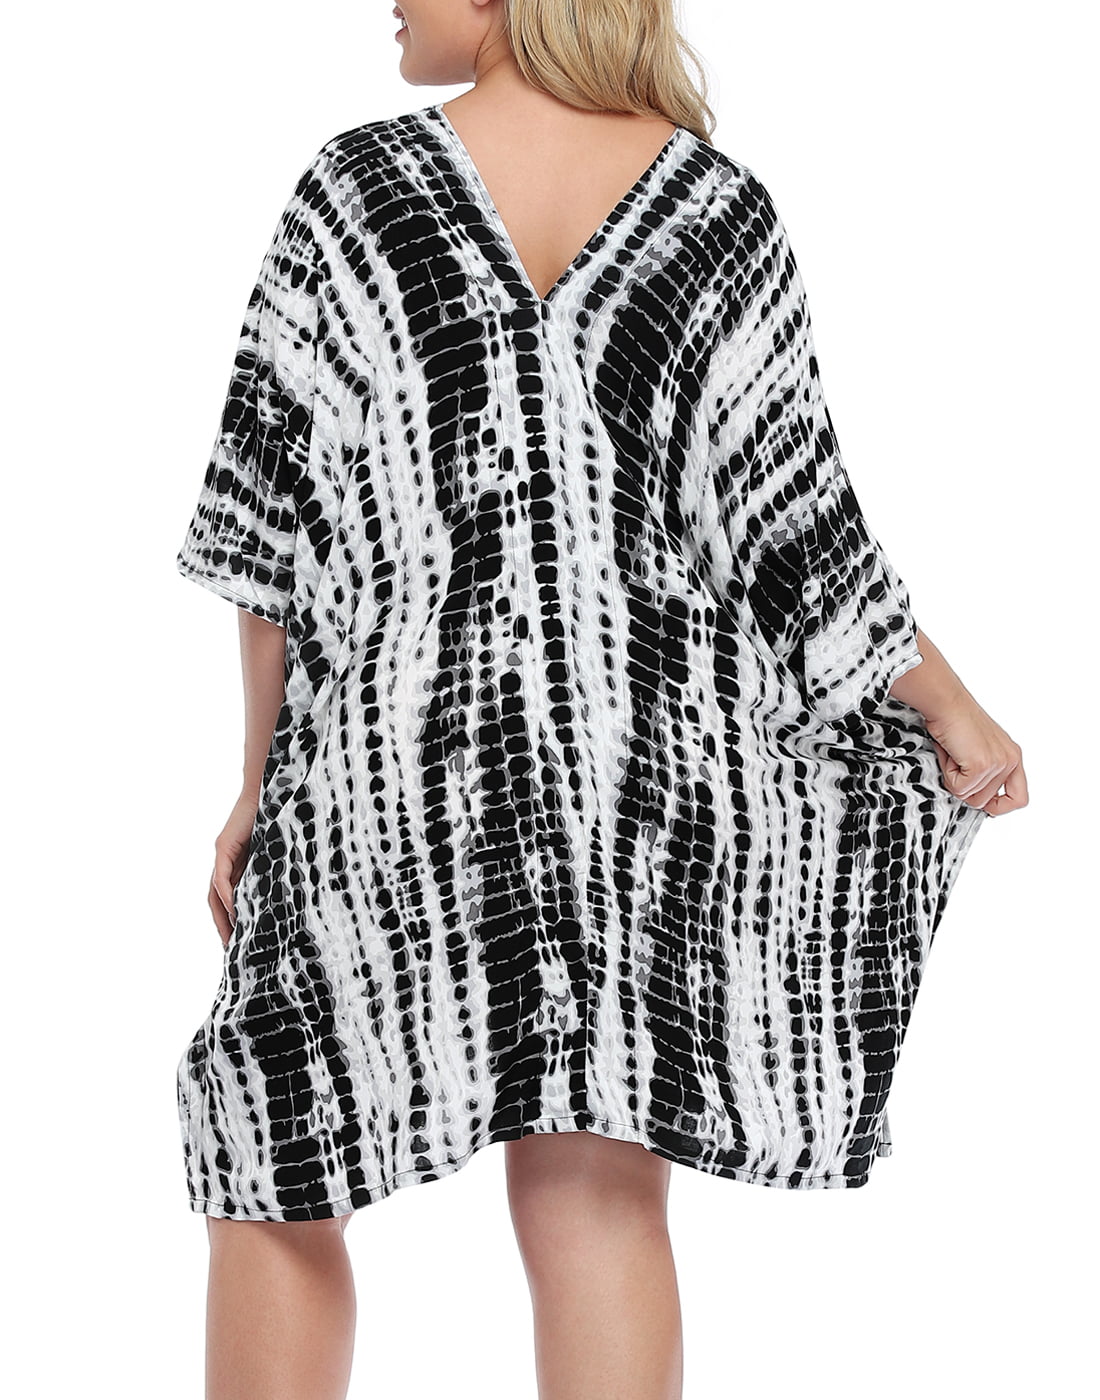 yoyorule Casual Summer Dress Plus Size Womens Fashion Casual Vacation Style Striped Print Sleeveless Dress 